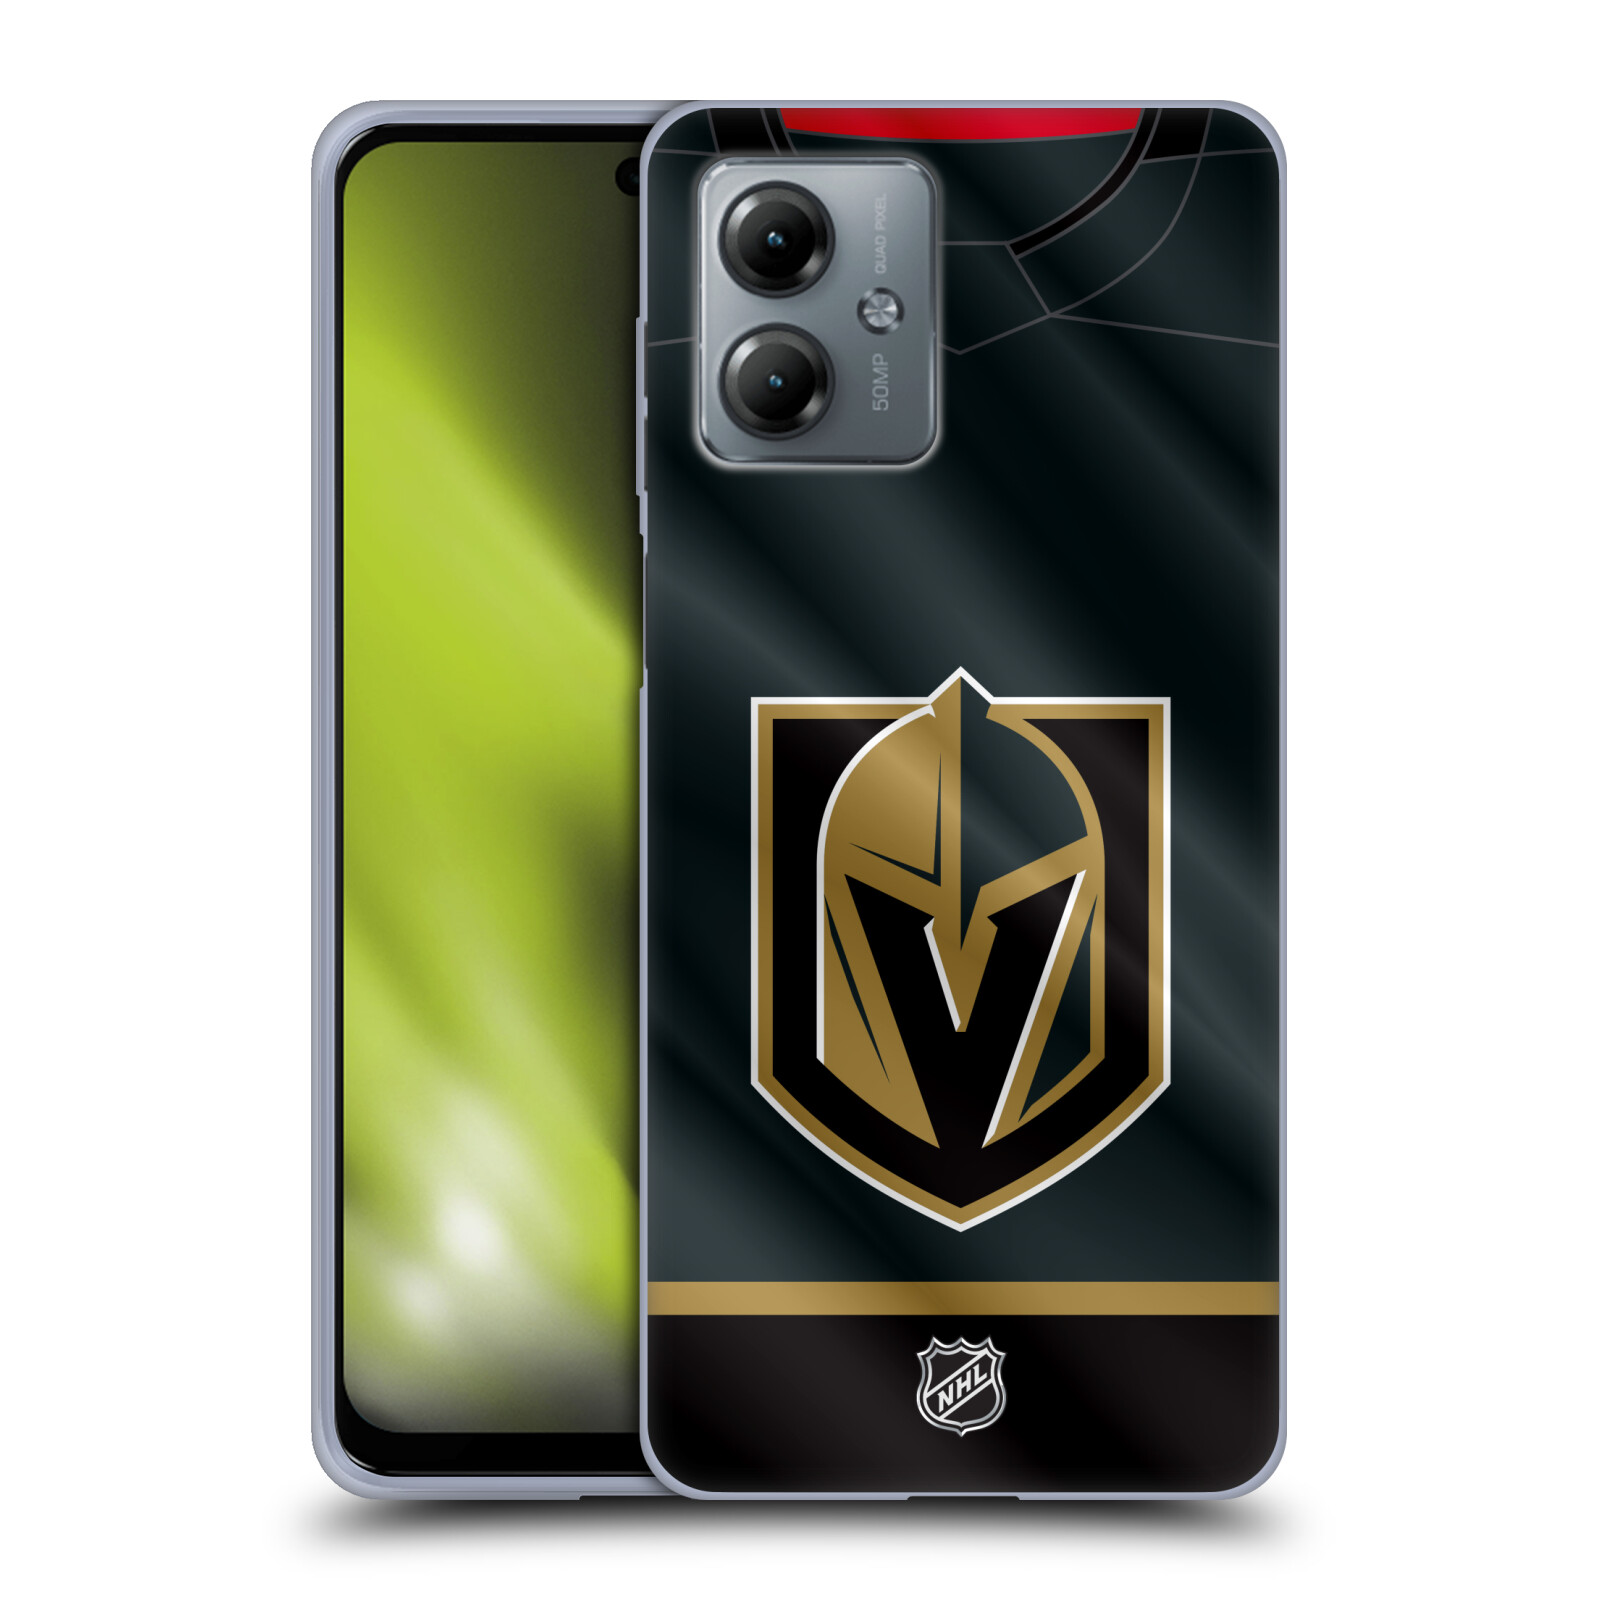 Silikonové pouzdro na mobil Motorola Moto G14 - NHL - Dres Vegas Golden Knights (Silikonový kryt, obal, pouzdro na mobilní telefon Motorola Moto G14 s licencovaným motivem NHL - Dres Vegas Golden Knights)